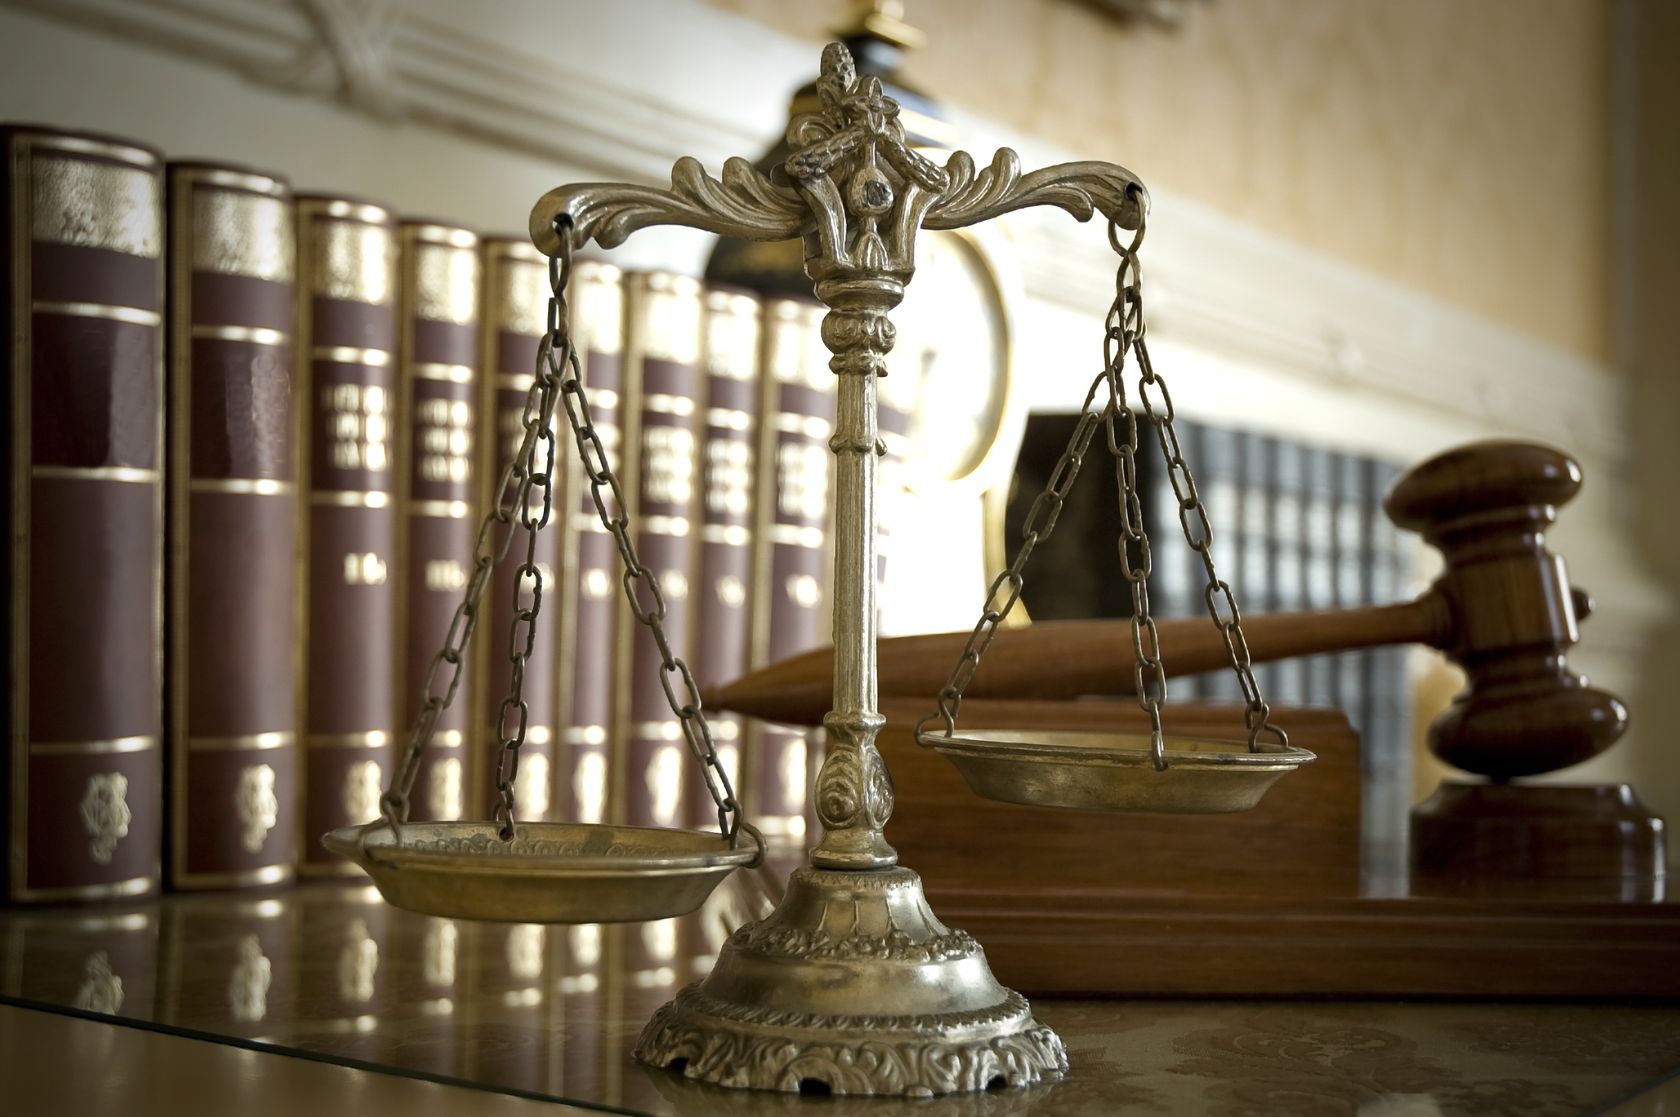 Professional Liability (E&O Insurance) for Lawyers